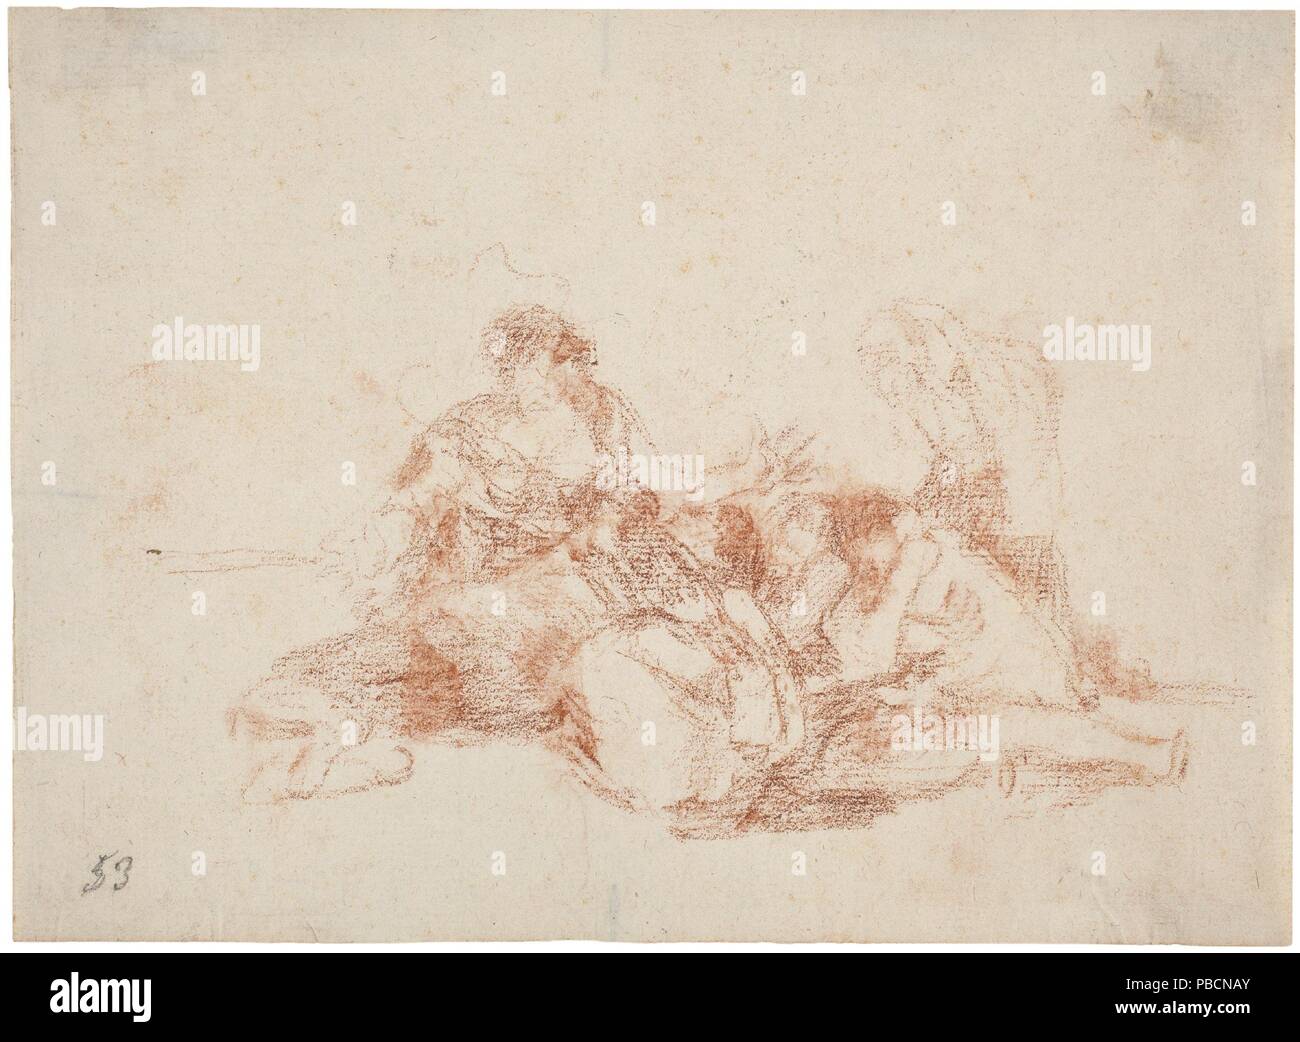 Francisco de Goya y Lucientes/Hunger Szene'. 1812 - 1814. Rote Kreide auf Elfenbein Bütten. Museum: Museo del Prado, Madrid, España. Stockfoto